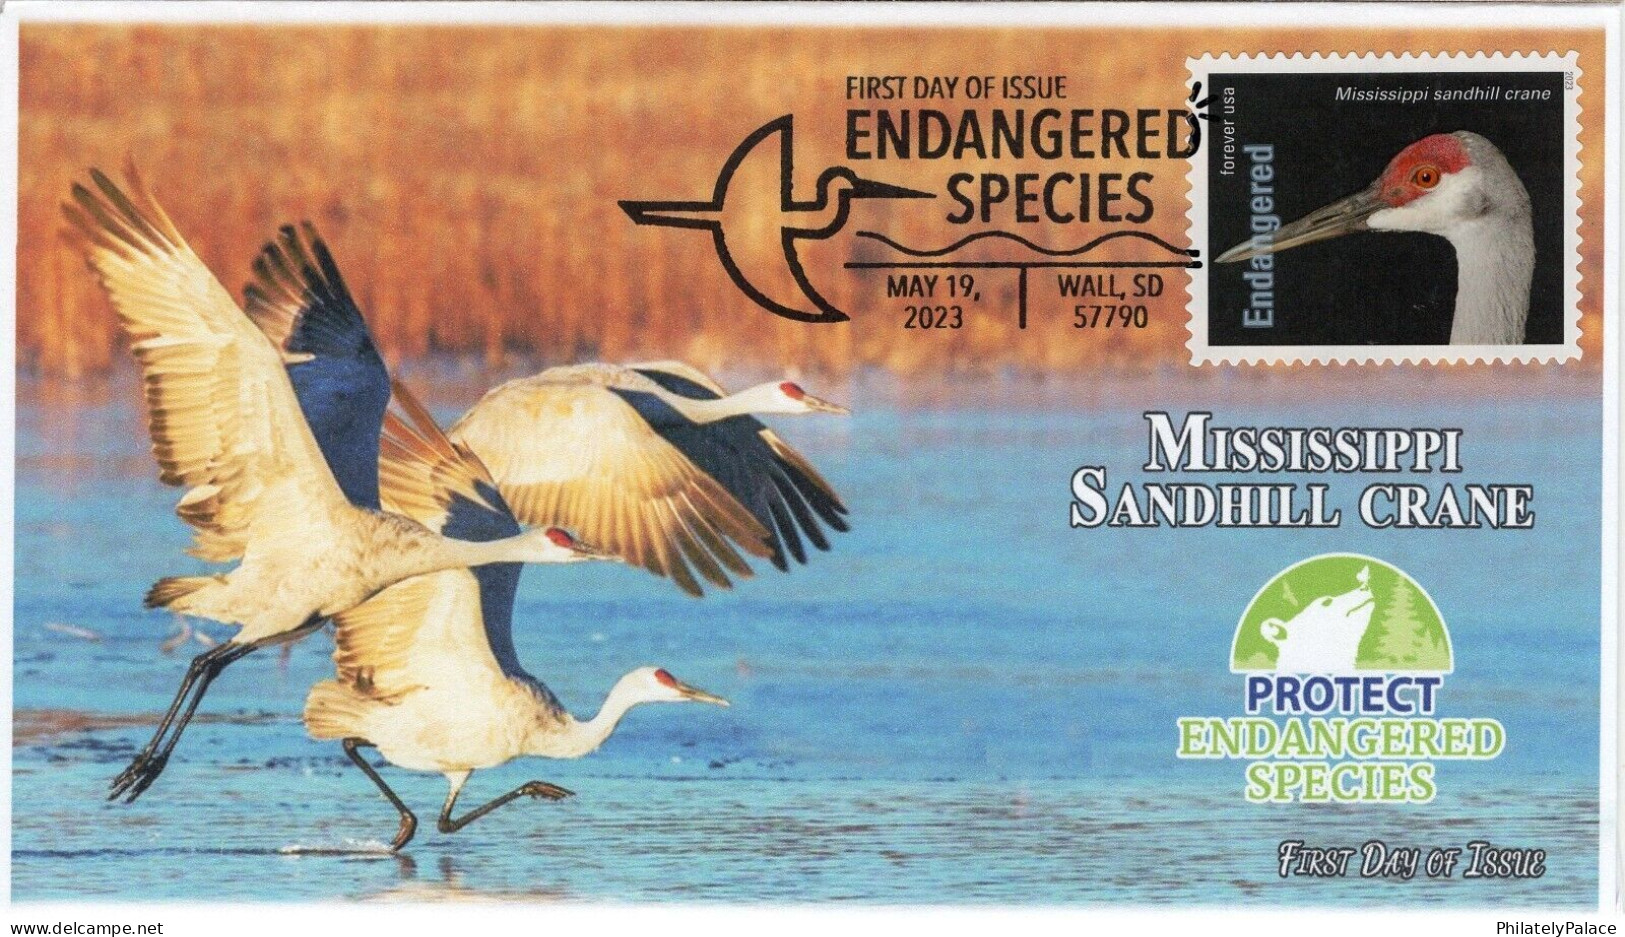 USA 2023 Mississippi Sandhill Crane, River, Endangered Species, Bird,Pictorial Postmark, FDC Cover (**) - Briefe U. Dokumente